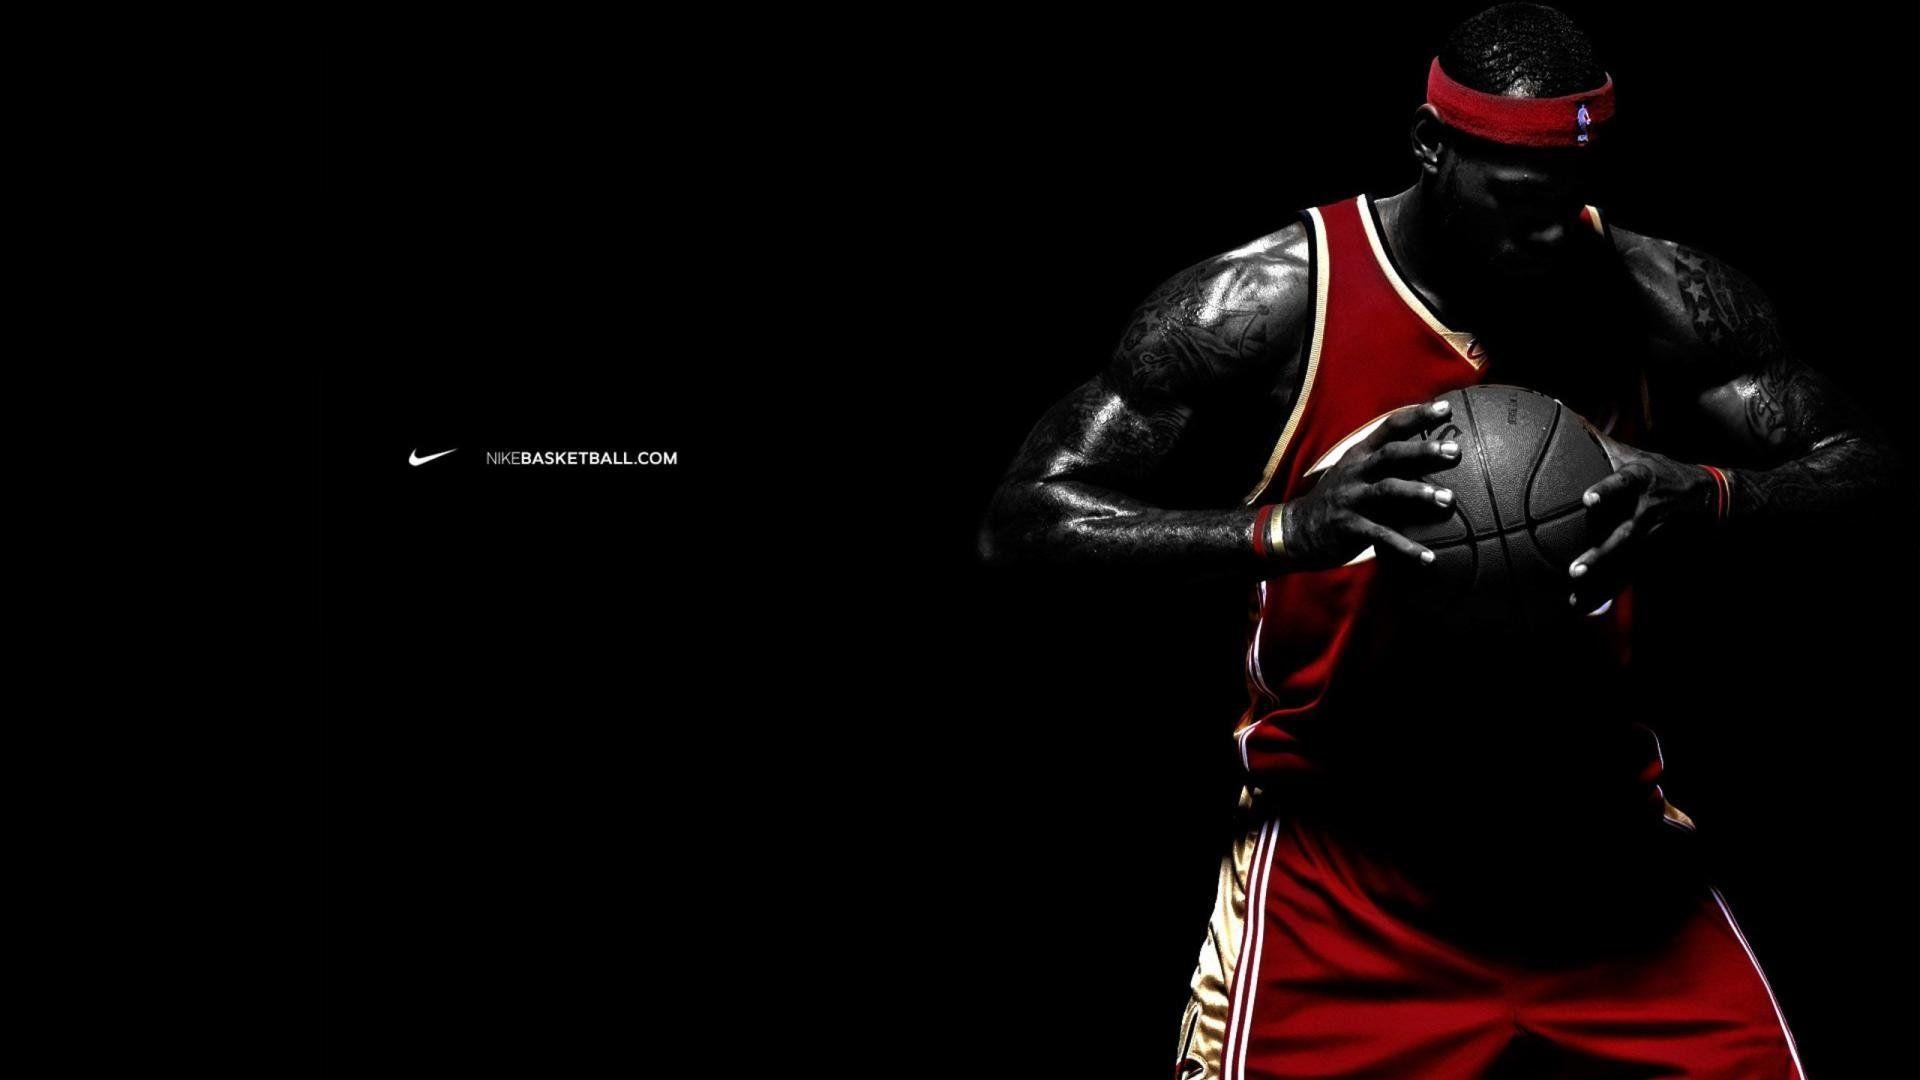 Nike Kobe 7 Wallpaper